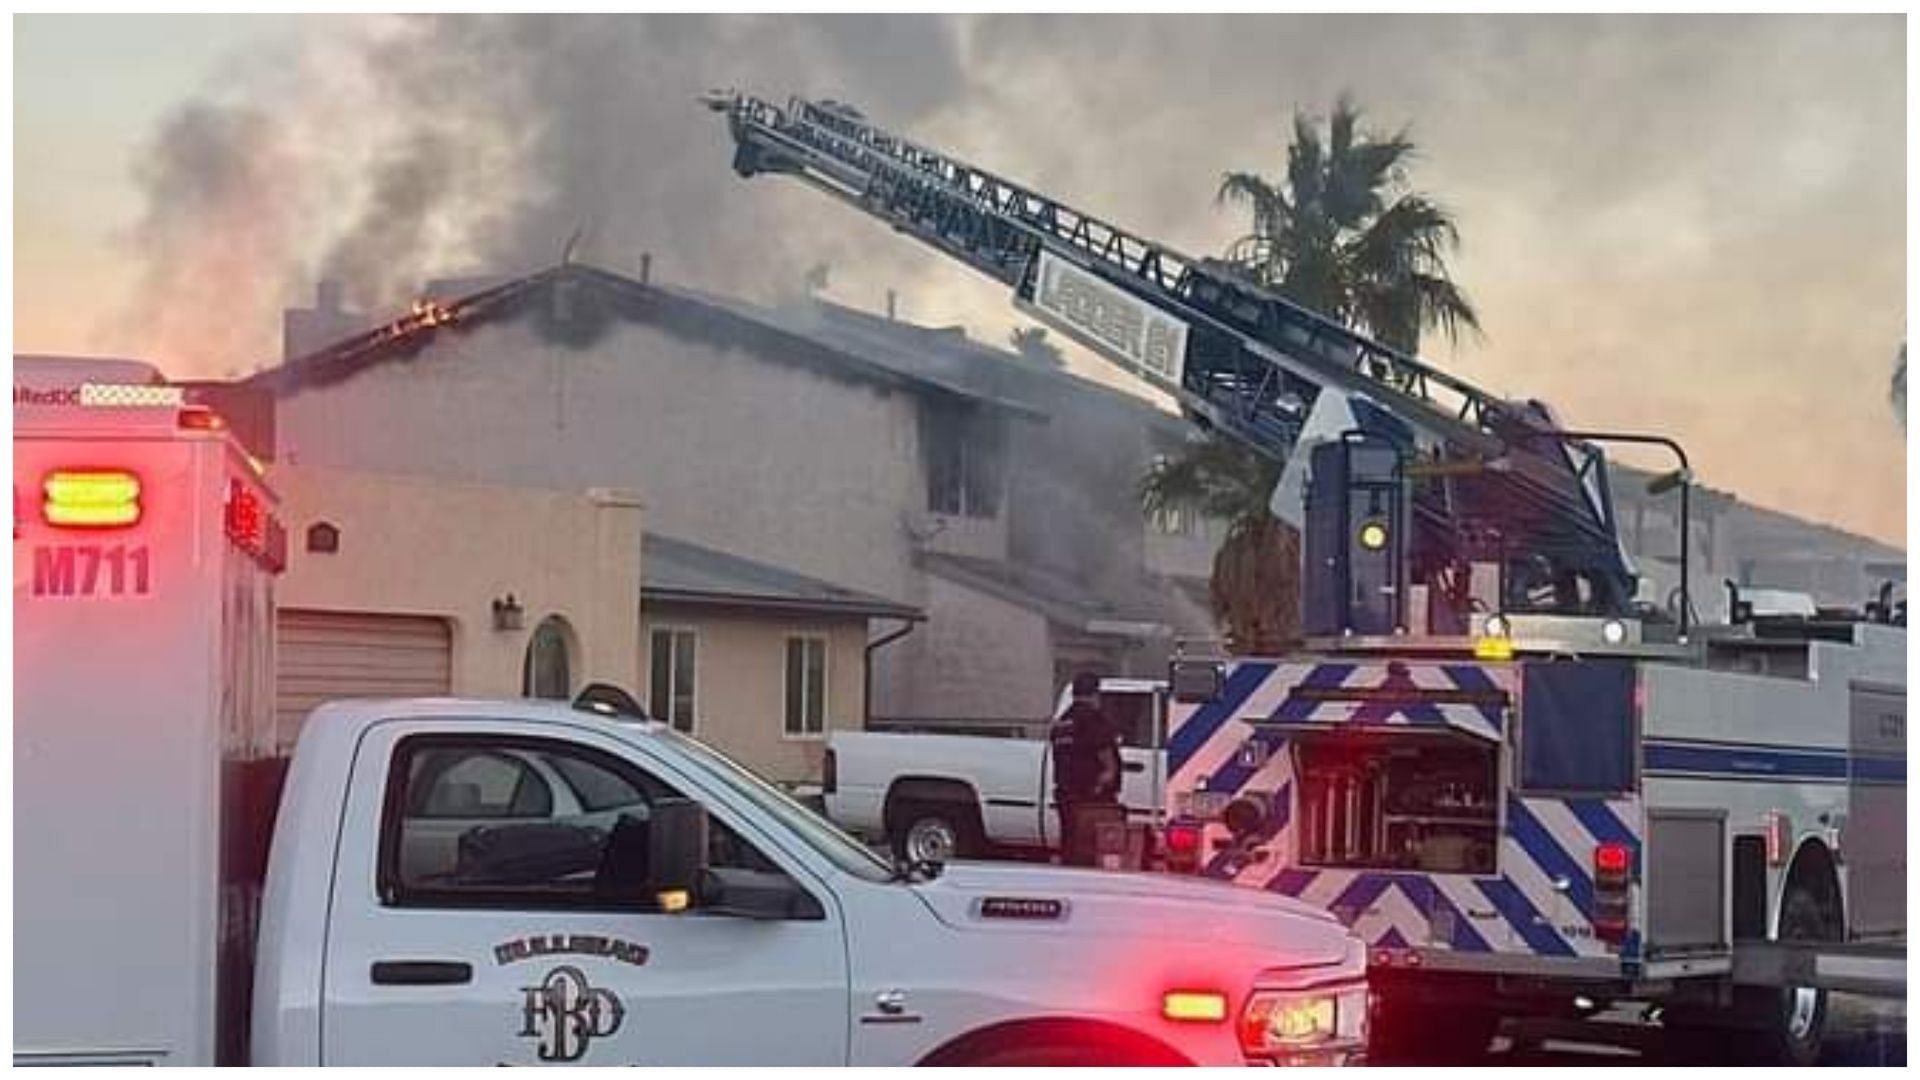 5 children lost their lives in a tragic house fire (Image via X/@VeteransforKari)